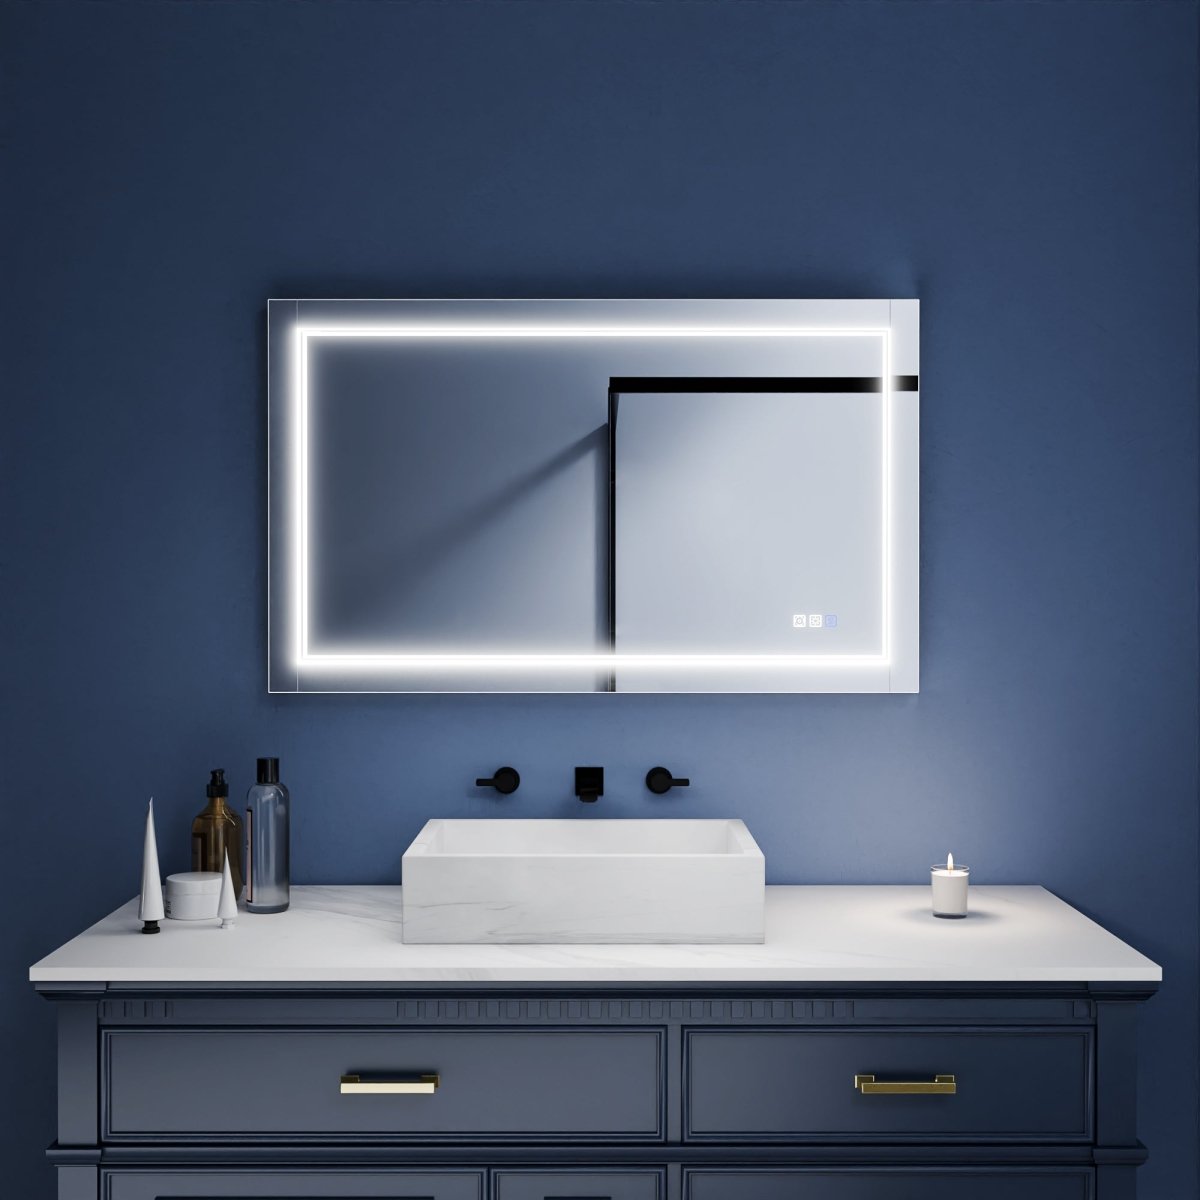 Ascend - M1d 40" x 24" Led Bathroom Mirror with Aluminum Frame